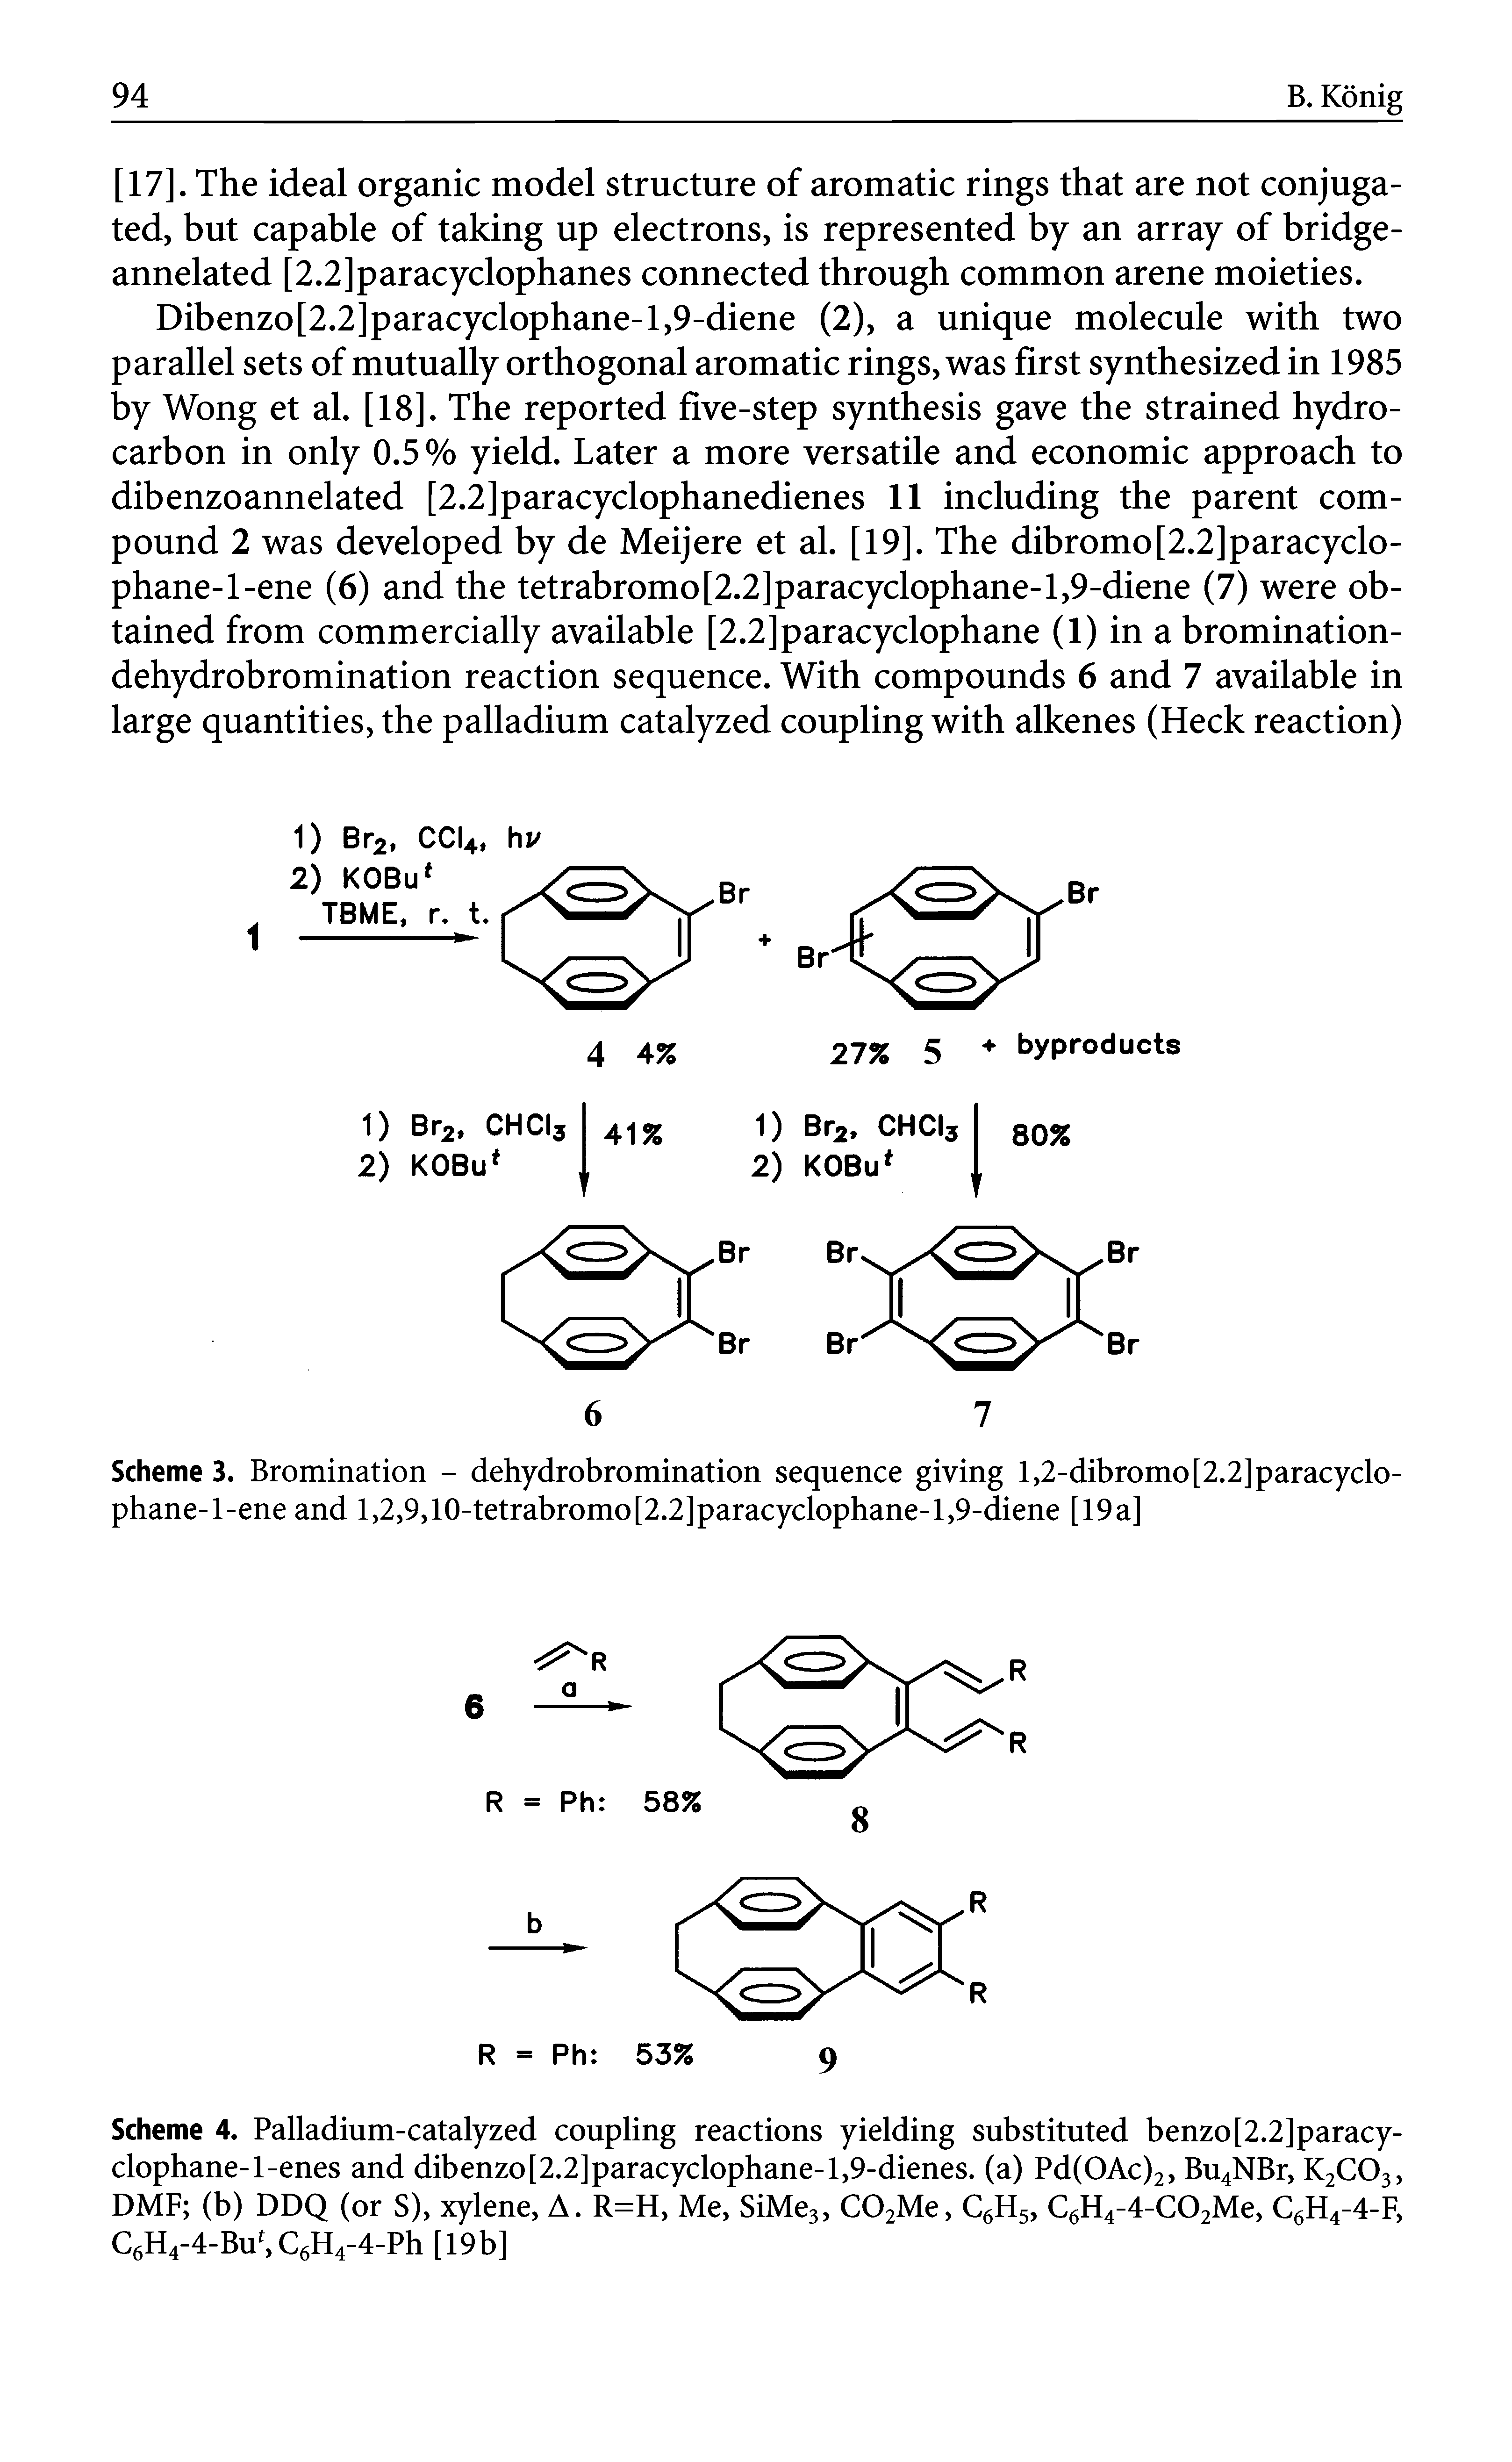 Scheme 3. Bromination - dehydrobromination sequence giving l,2-dibromo[2.2]paracyclo-phane-l-ene and 1,2,9,10-tetrabromo[2.2]paracyclophane-l,9-diene [19a]...